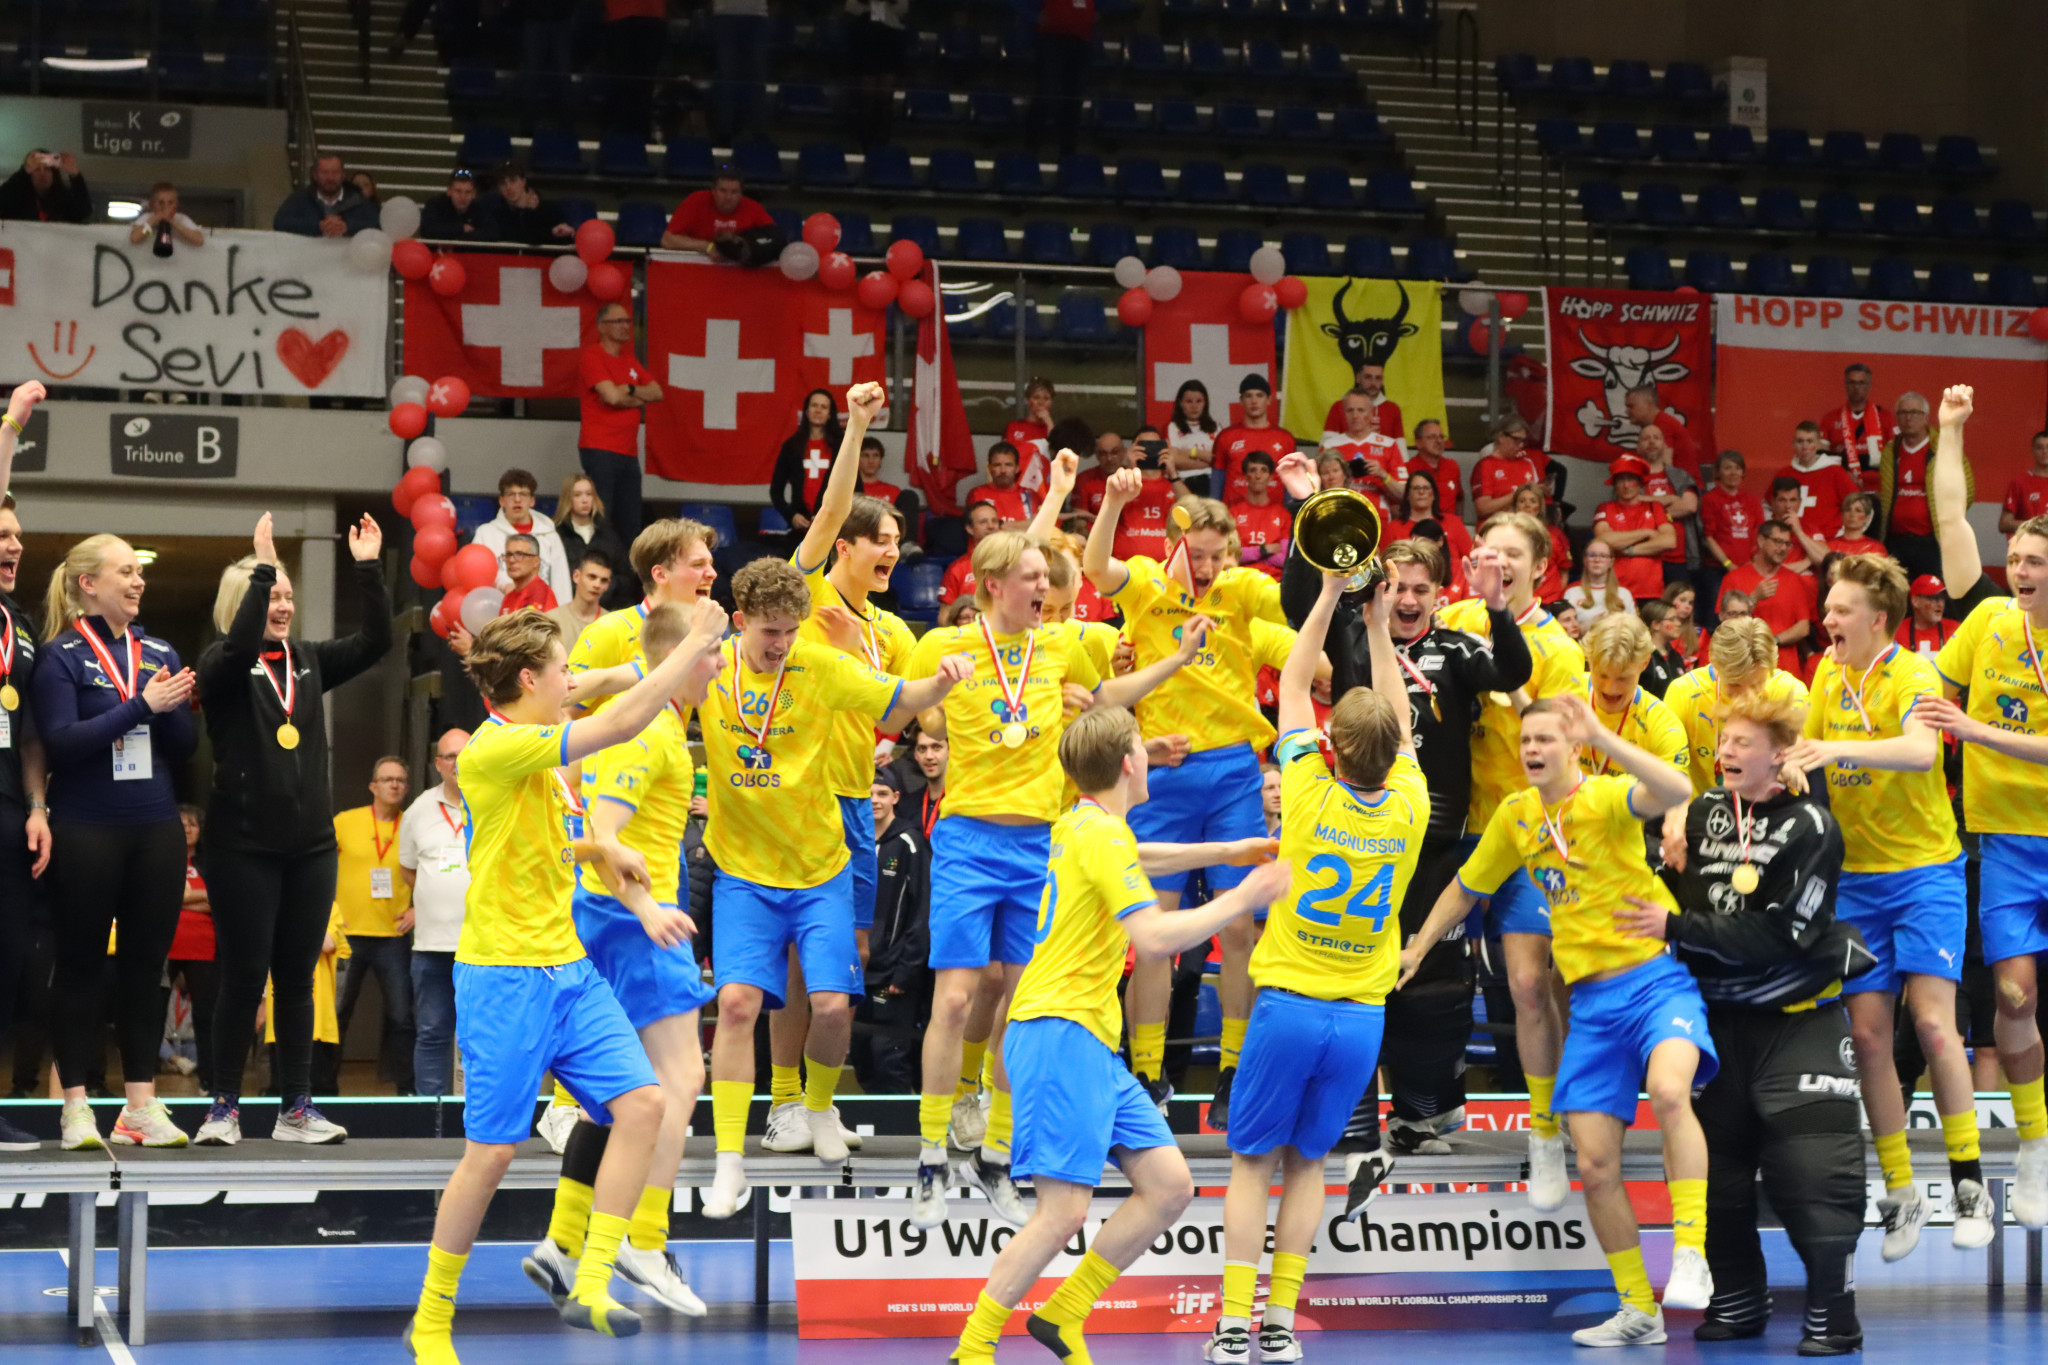 Sweden celebrate after winning the Men's Under-19 World Floorball Championship title, following their 7-4 defeat of Switzerland ©IFF/Flickr